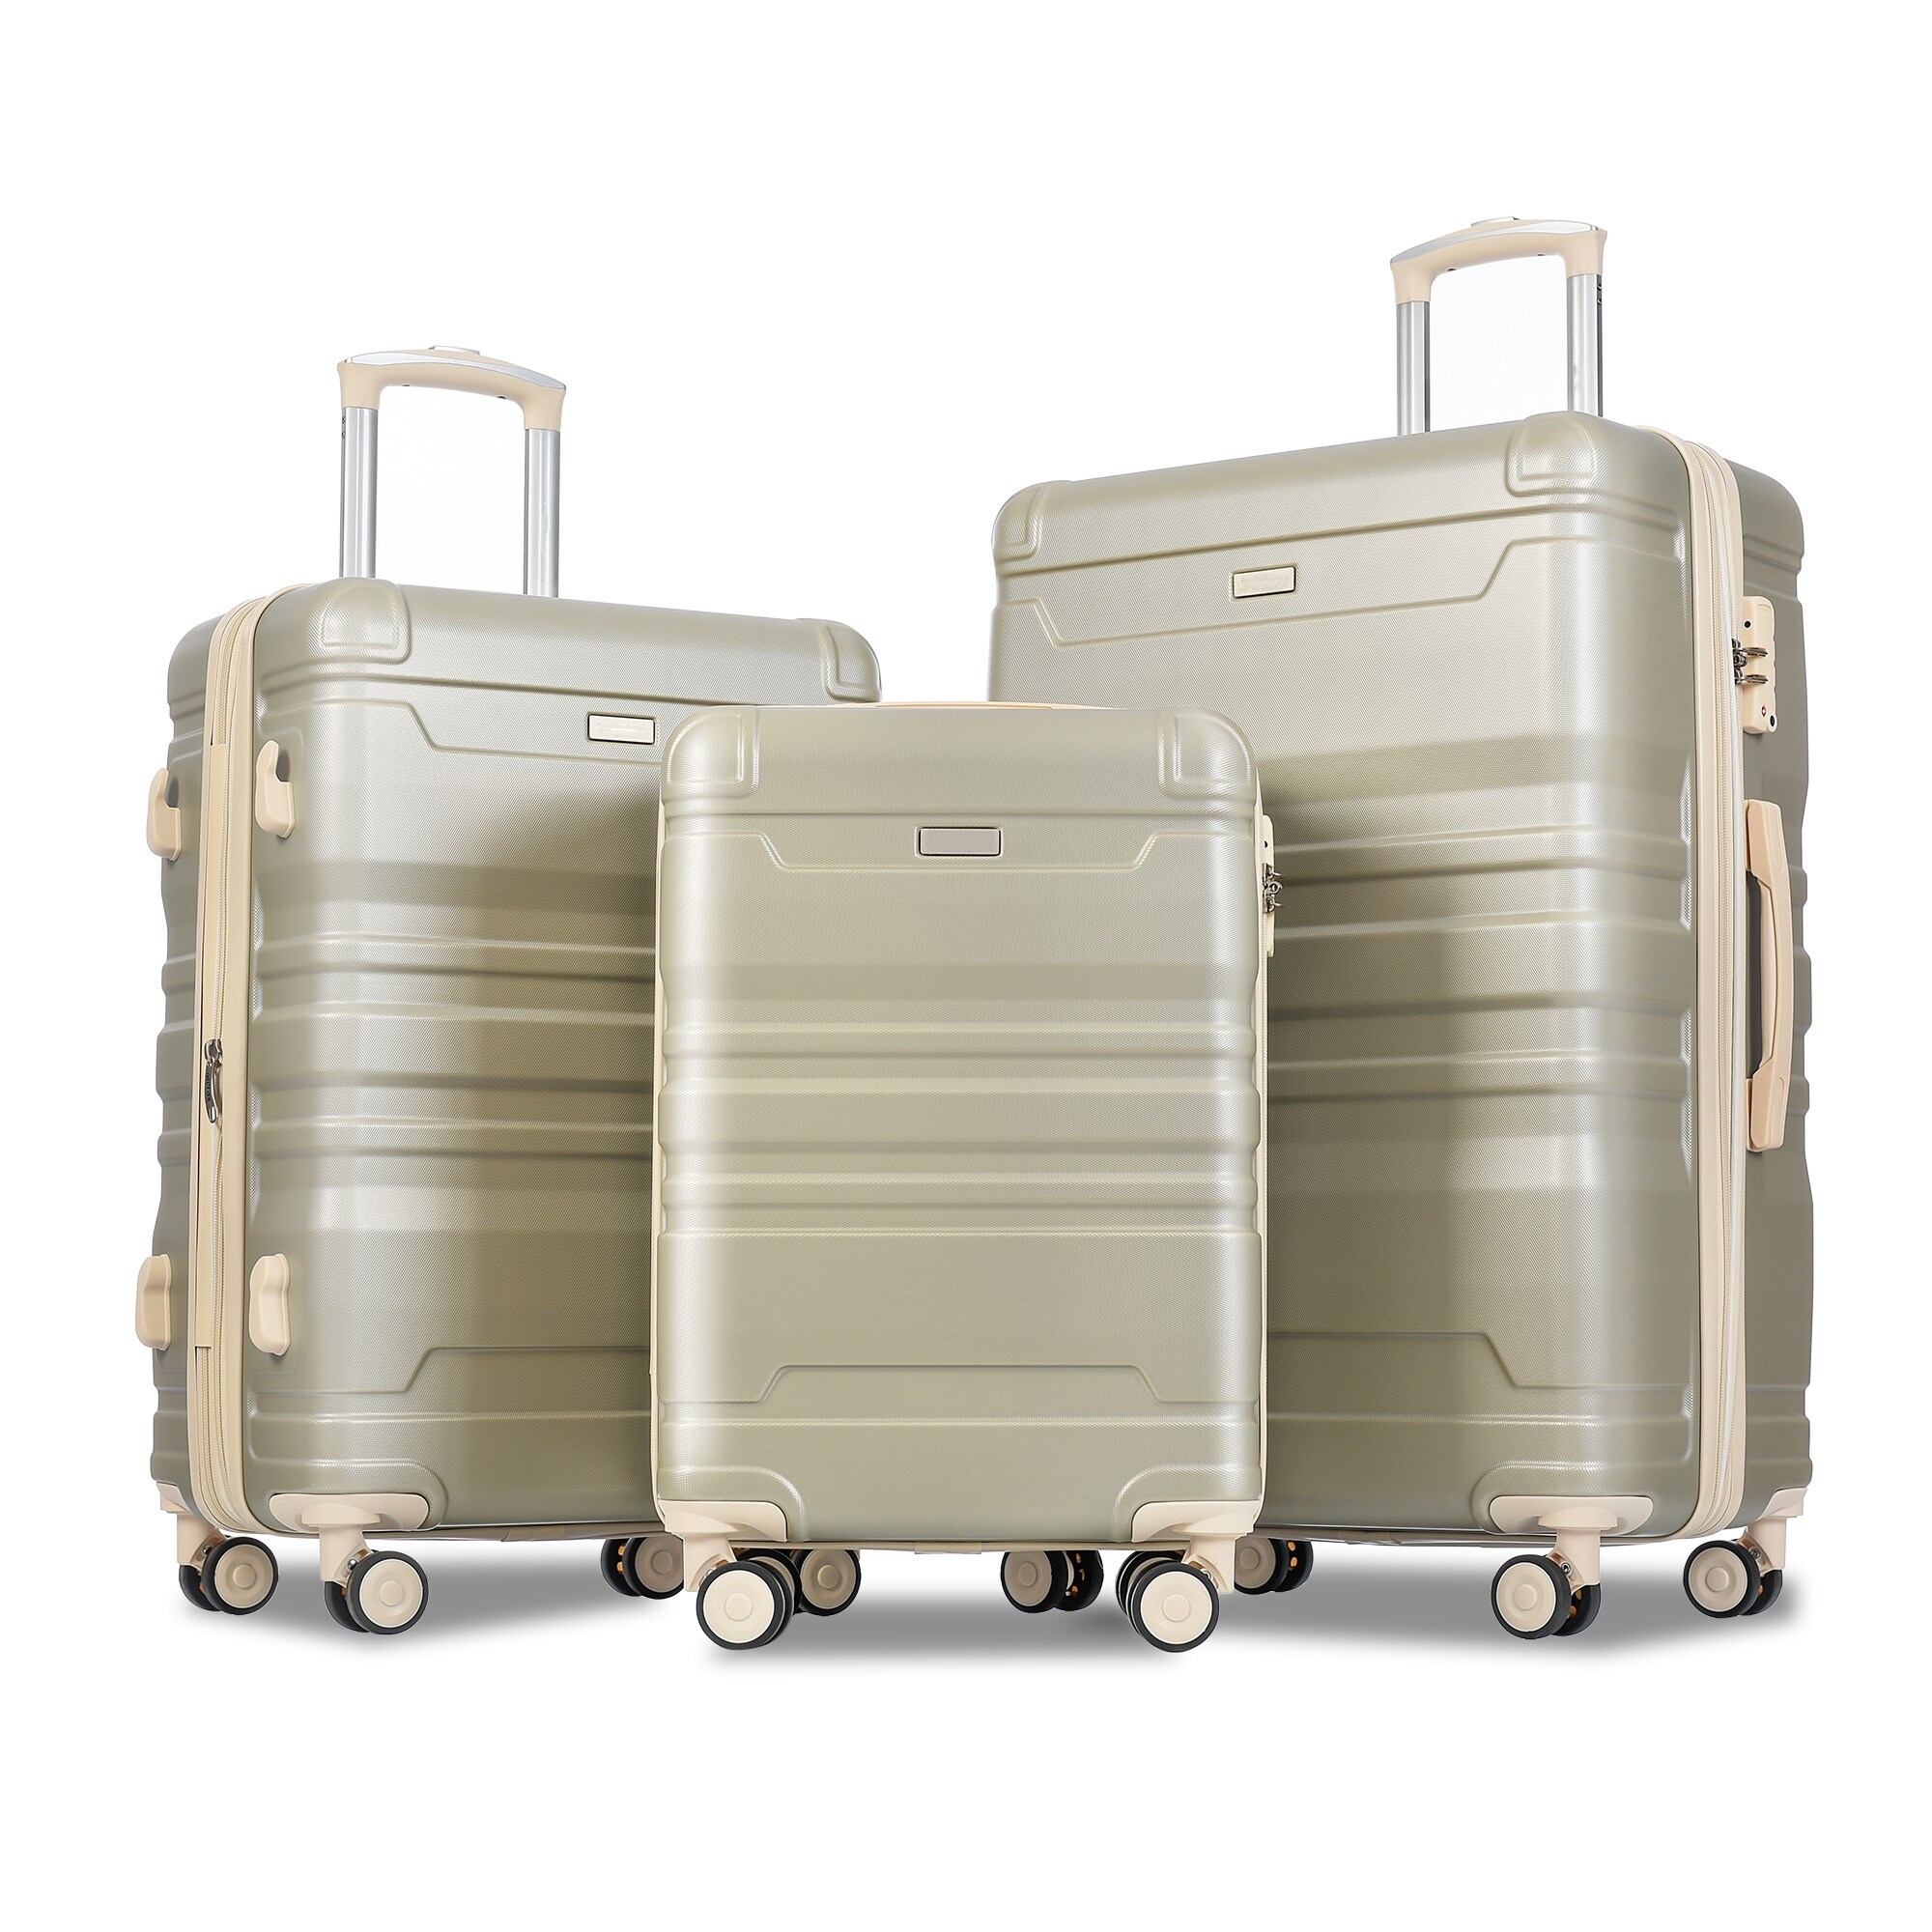 Louis Vuitton Carrier Bag / Gift Bag Approx Size: 37 x 32 x 7.5cm